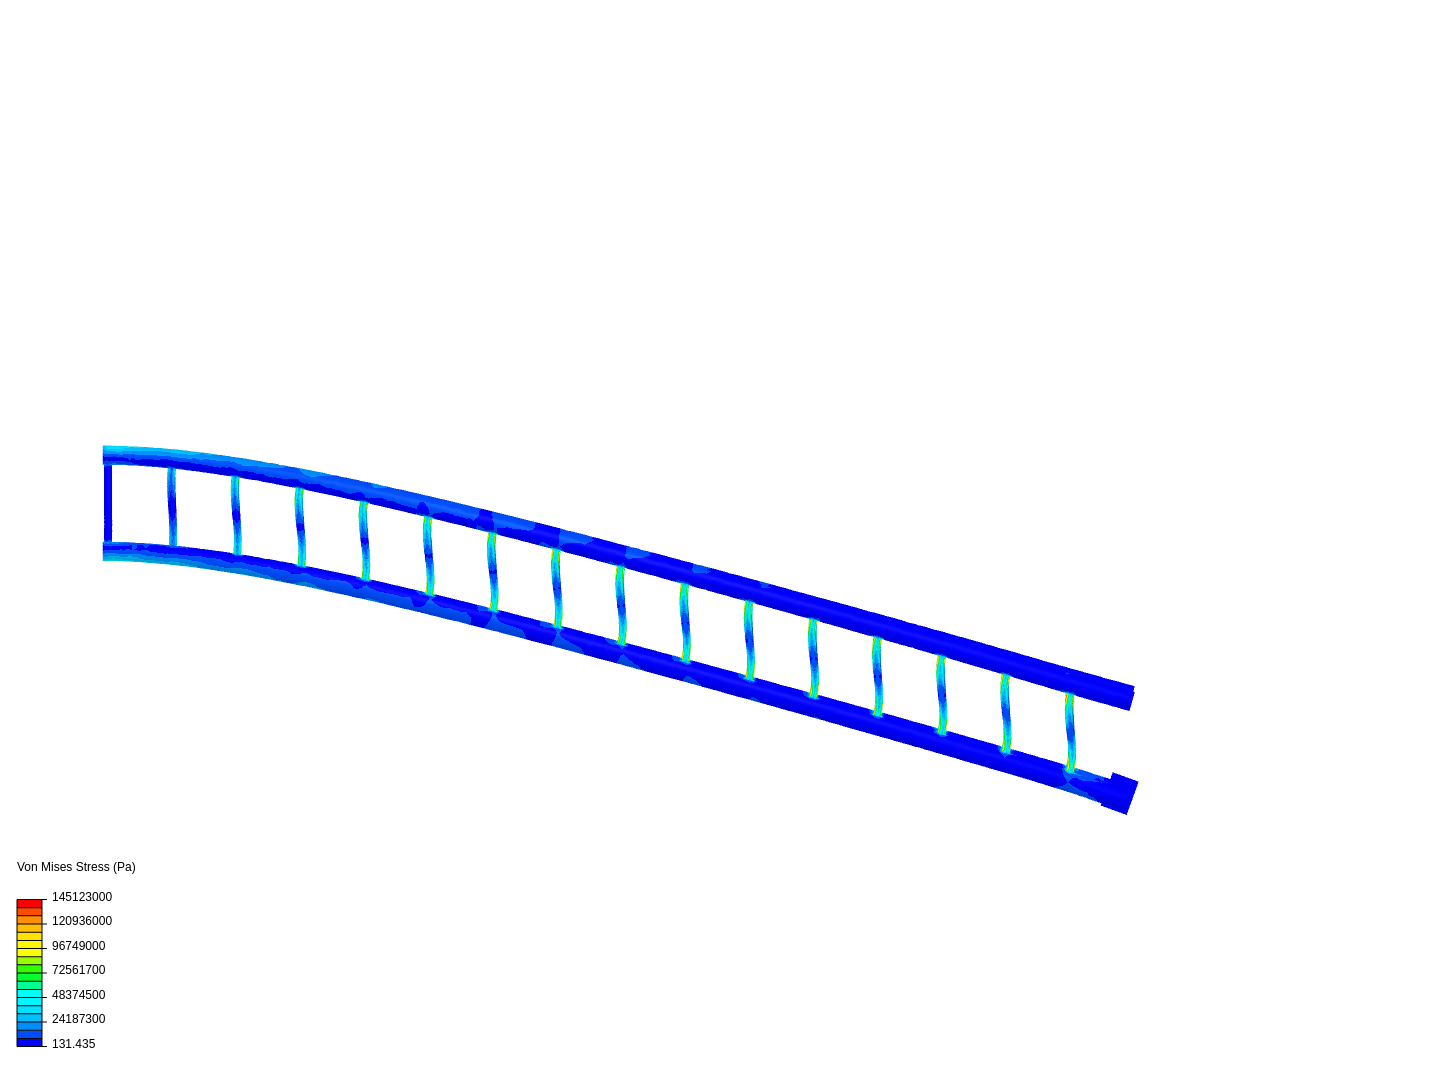 Linear stress analysis of a crane image